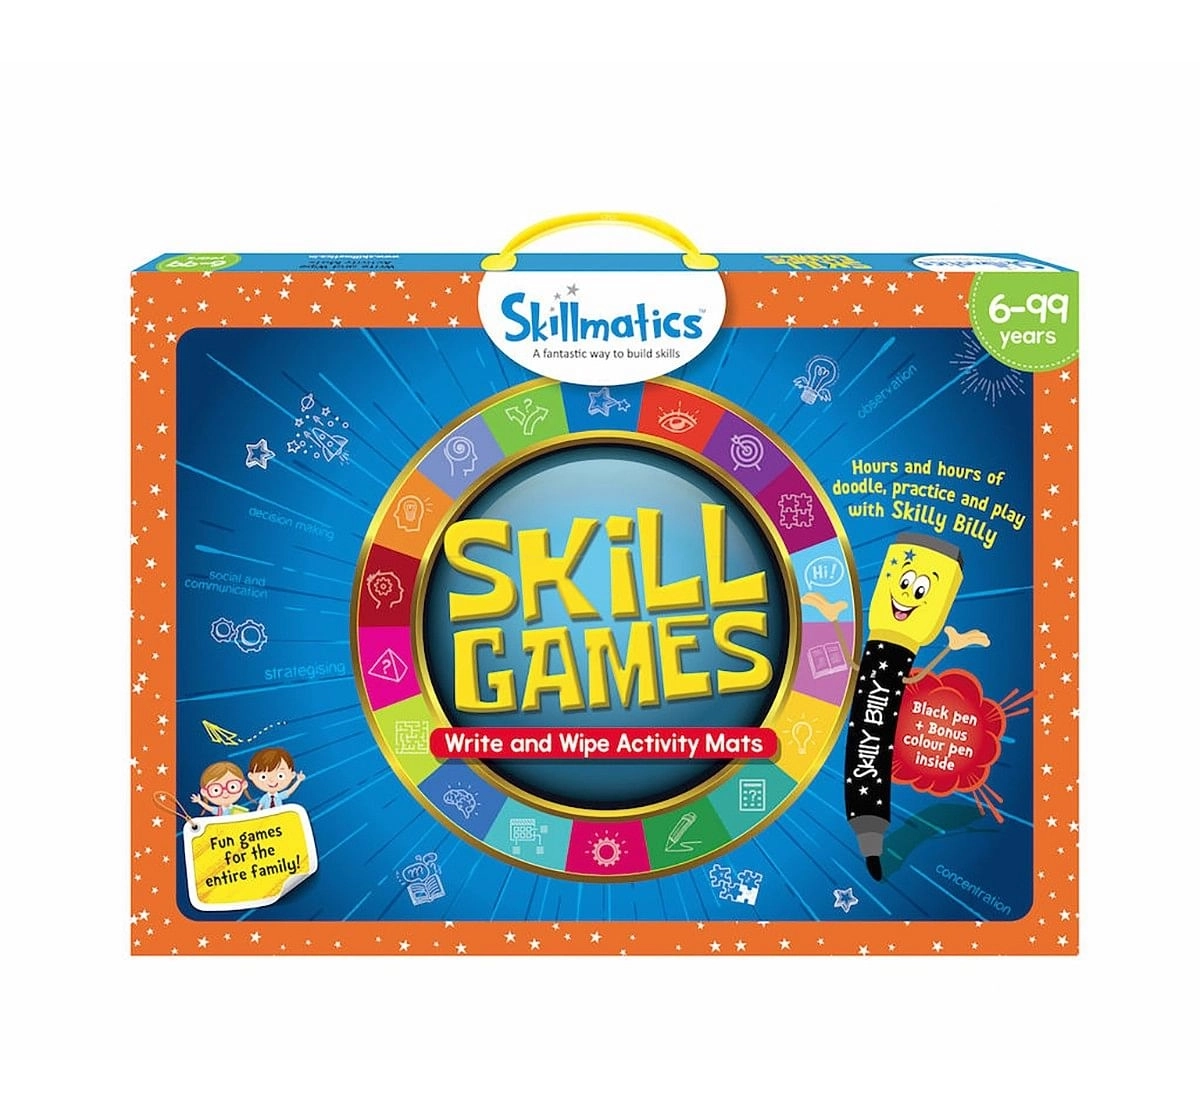  Skillmatics Skill Games   Games for Kids age 6Y+ 